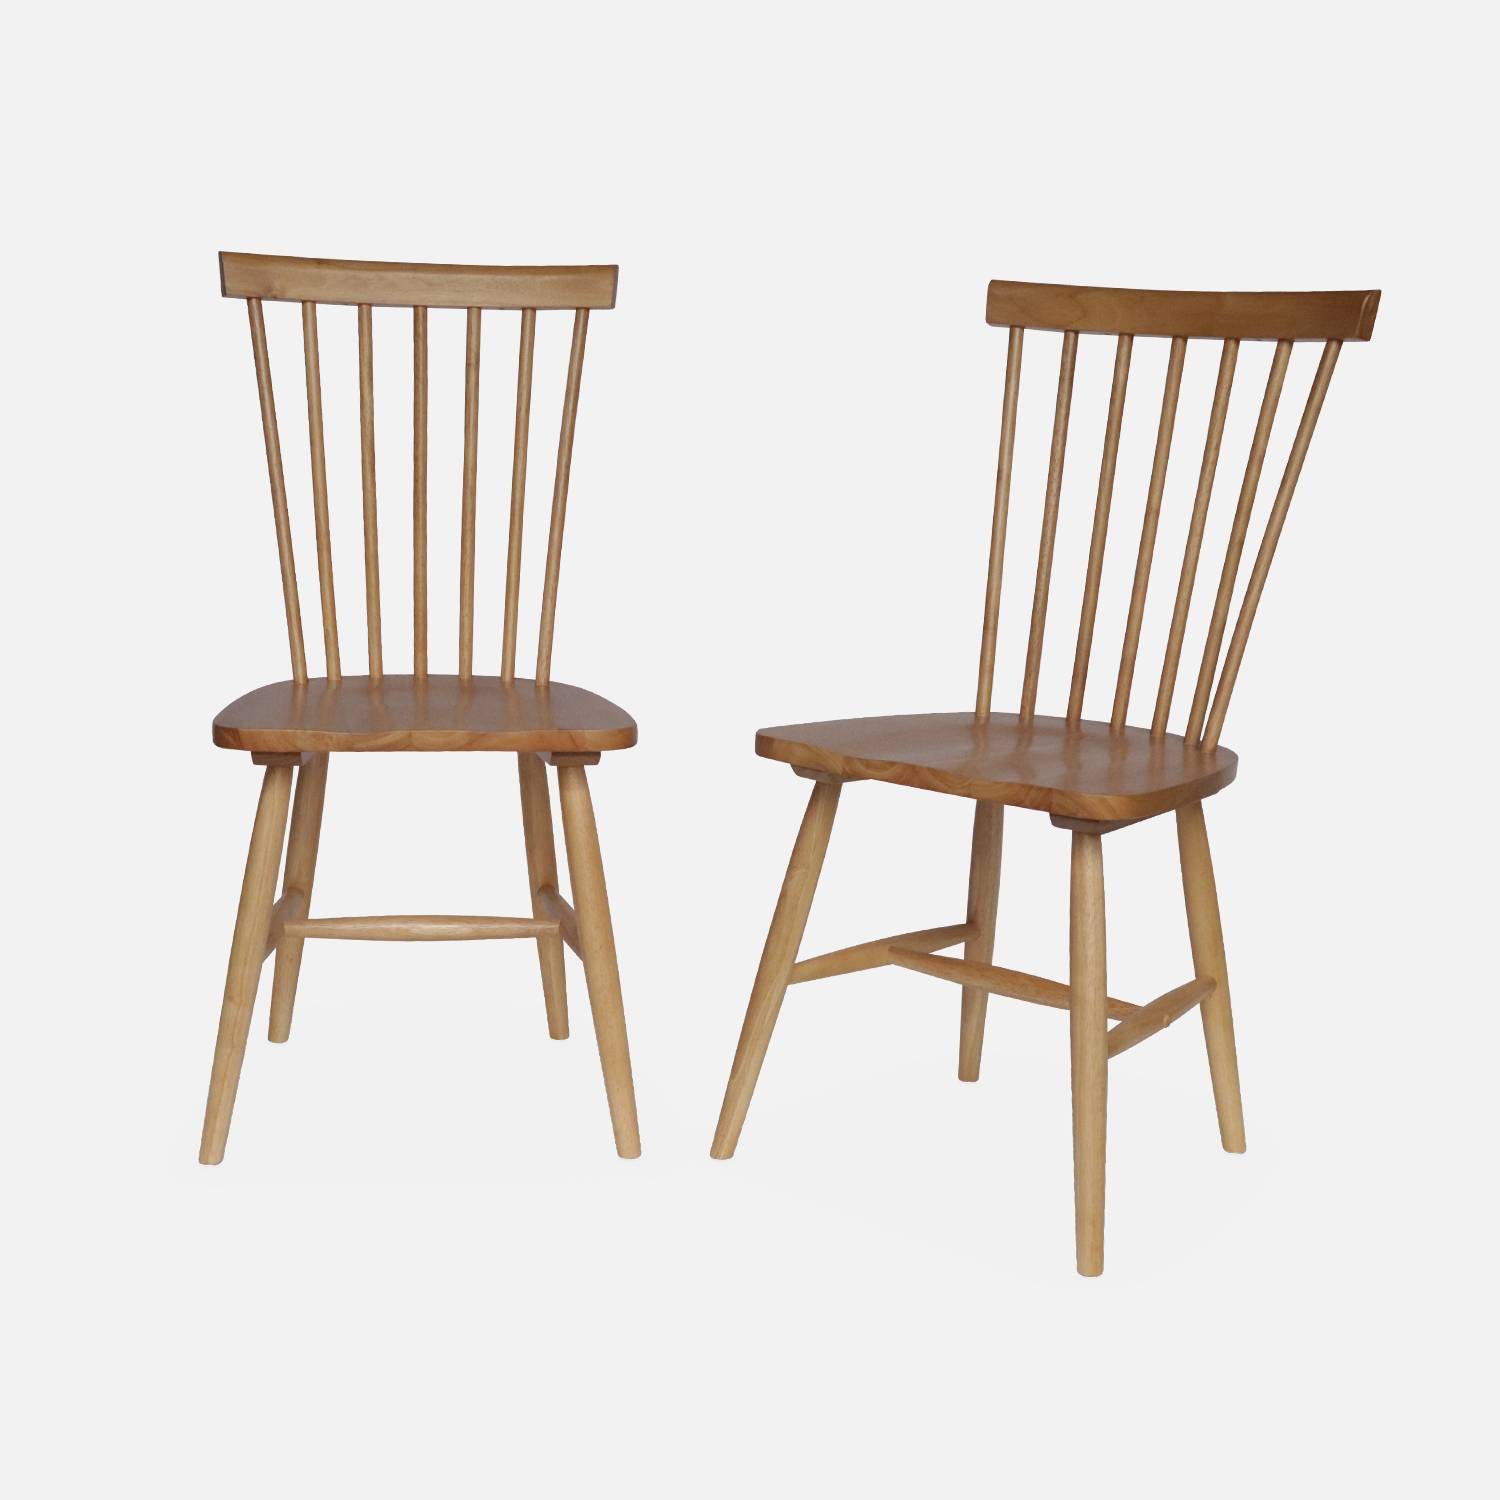 Pair of dining room chairs in Hevea wood | sweeek